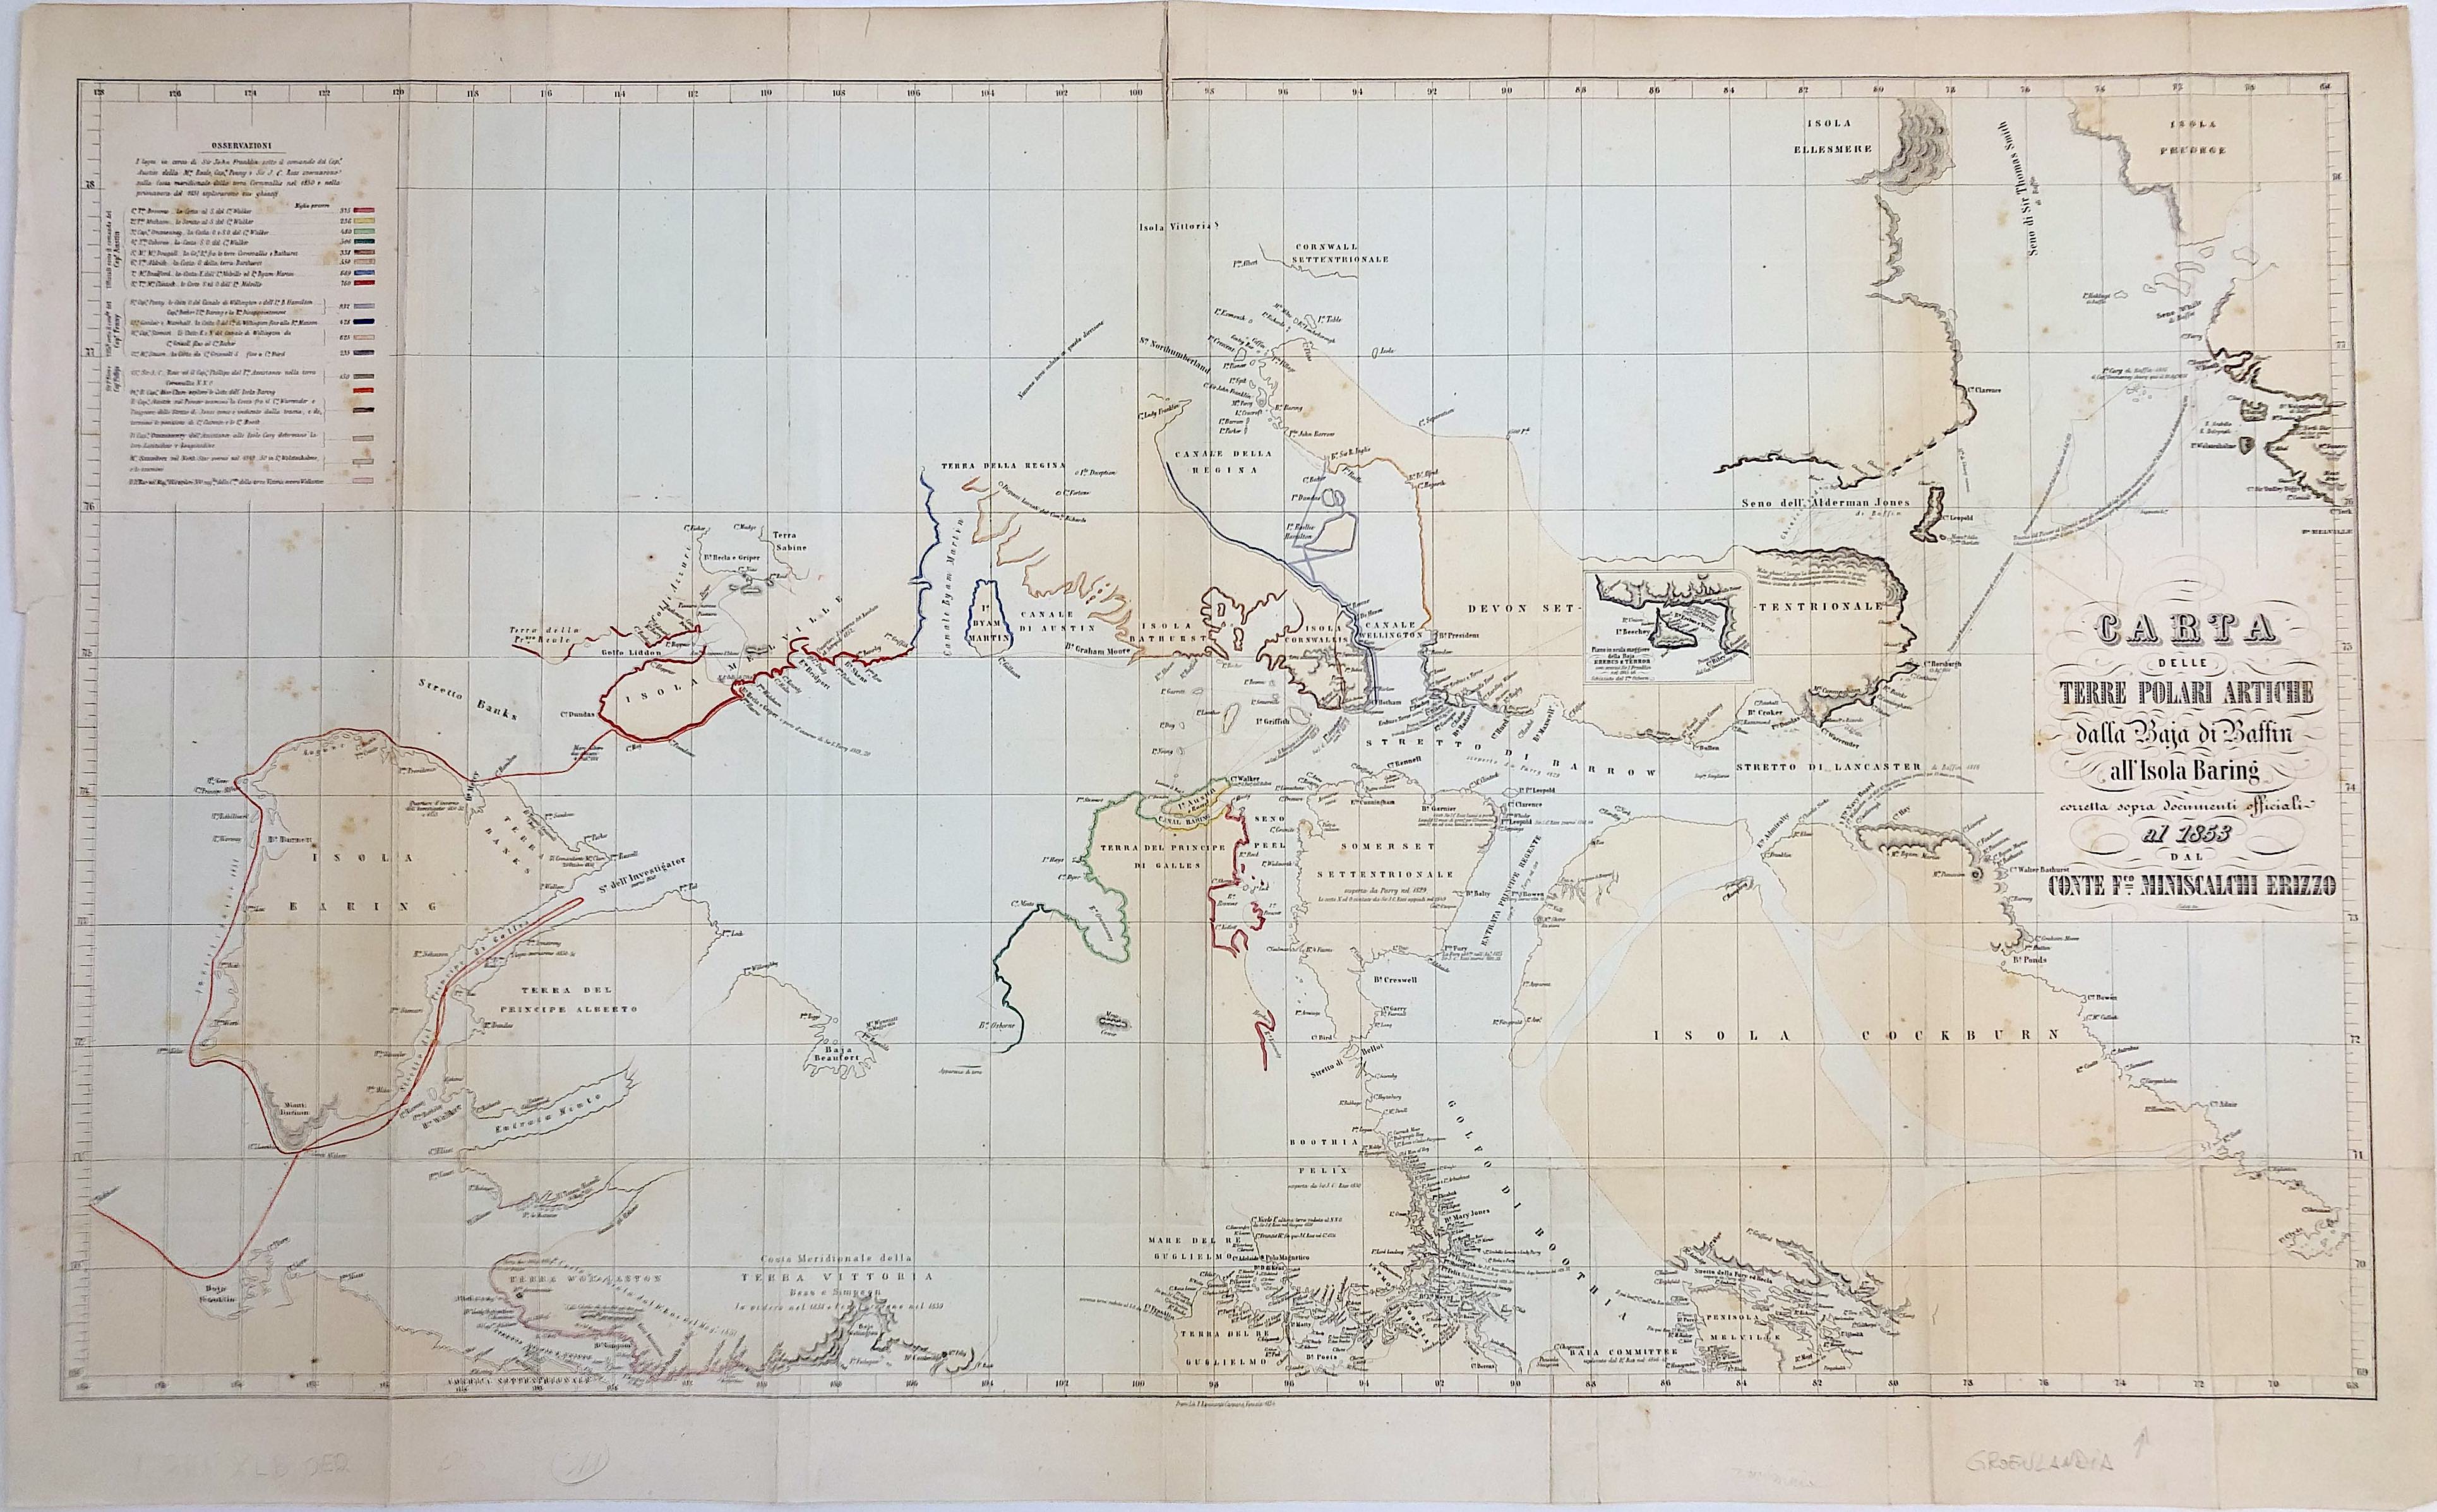 Nordpol im Jahr 1855 von Francesco Miniscalchi-Erizzo